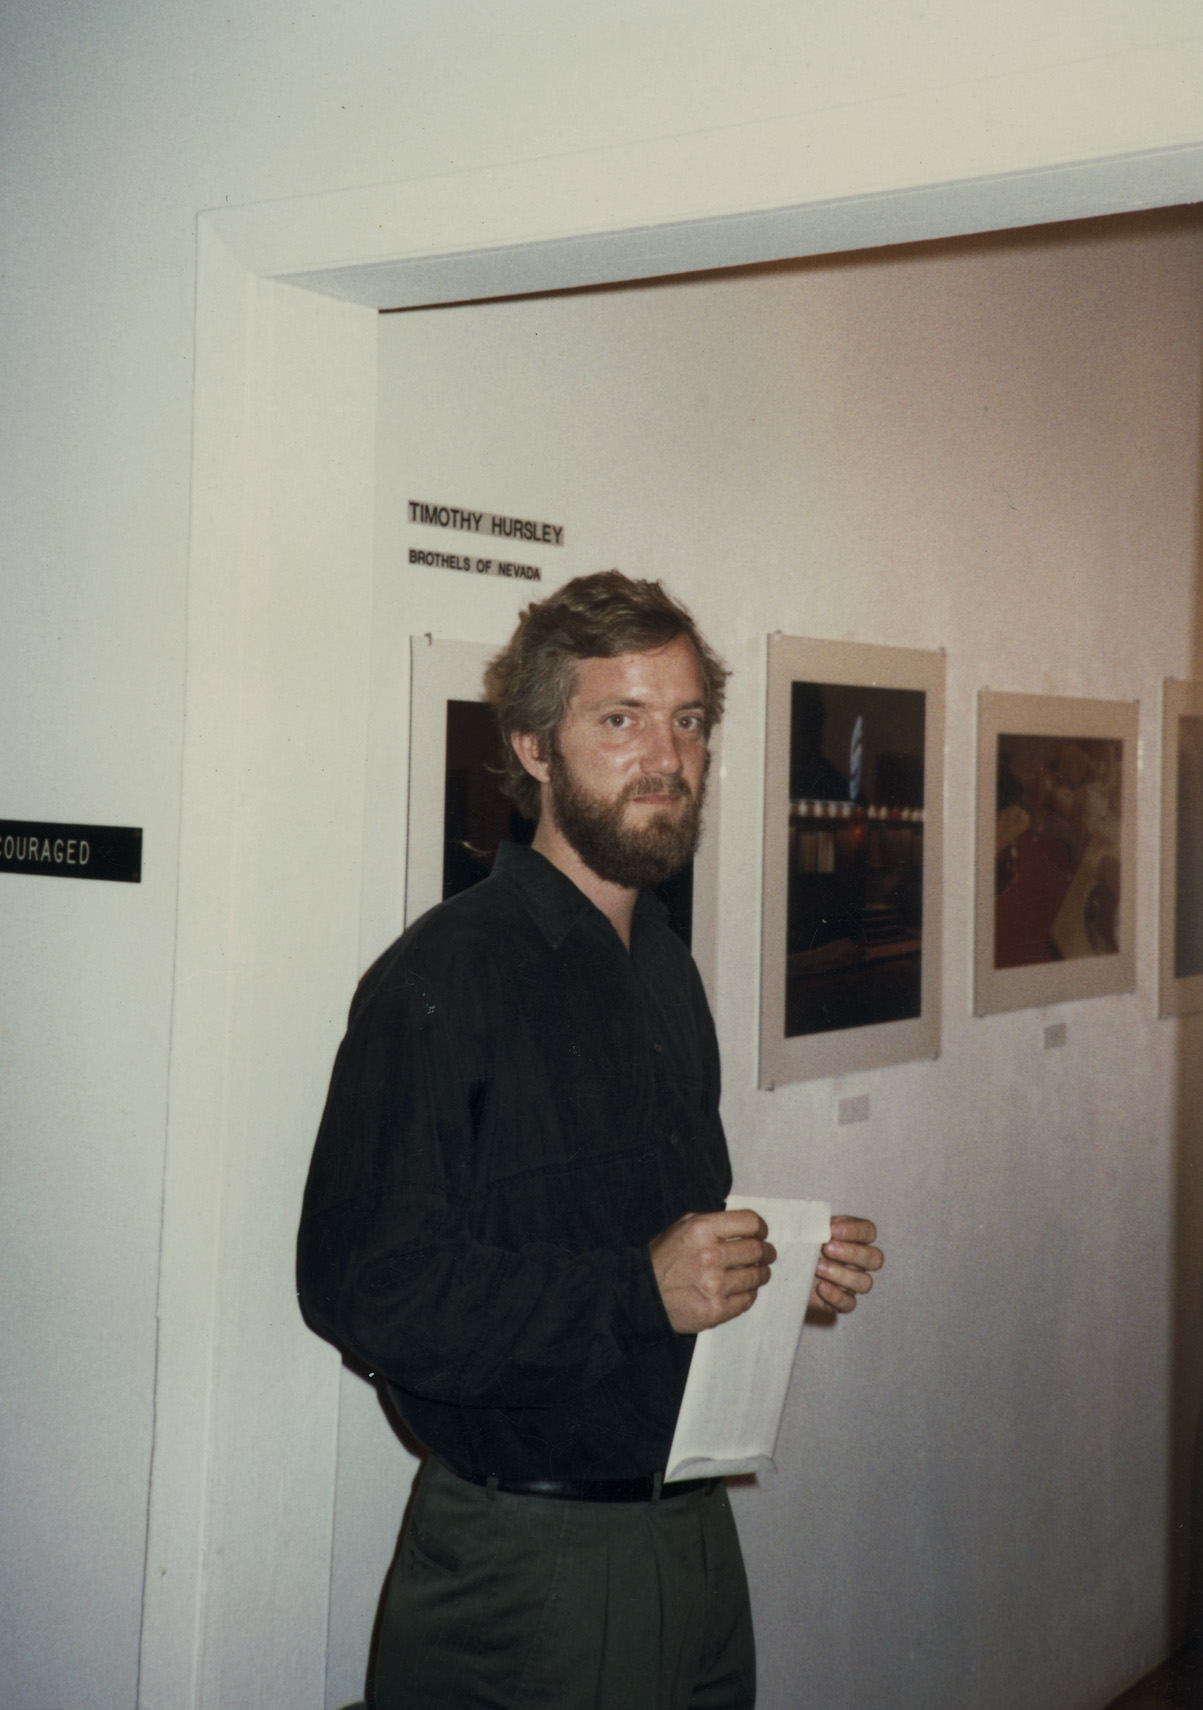 Hursley at OK Harris Gallery with Ivan Karp 1990